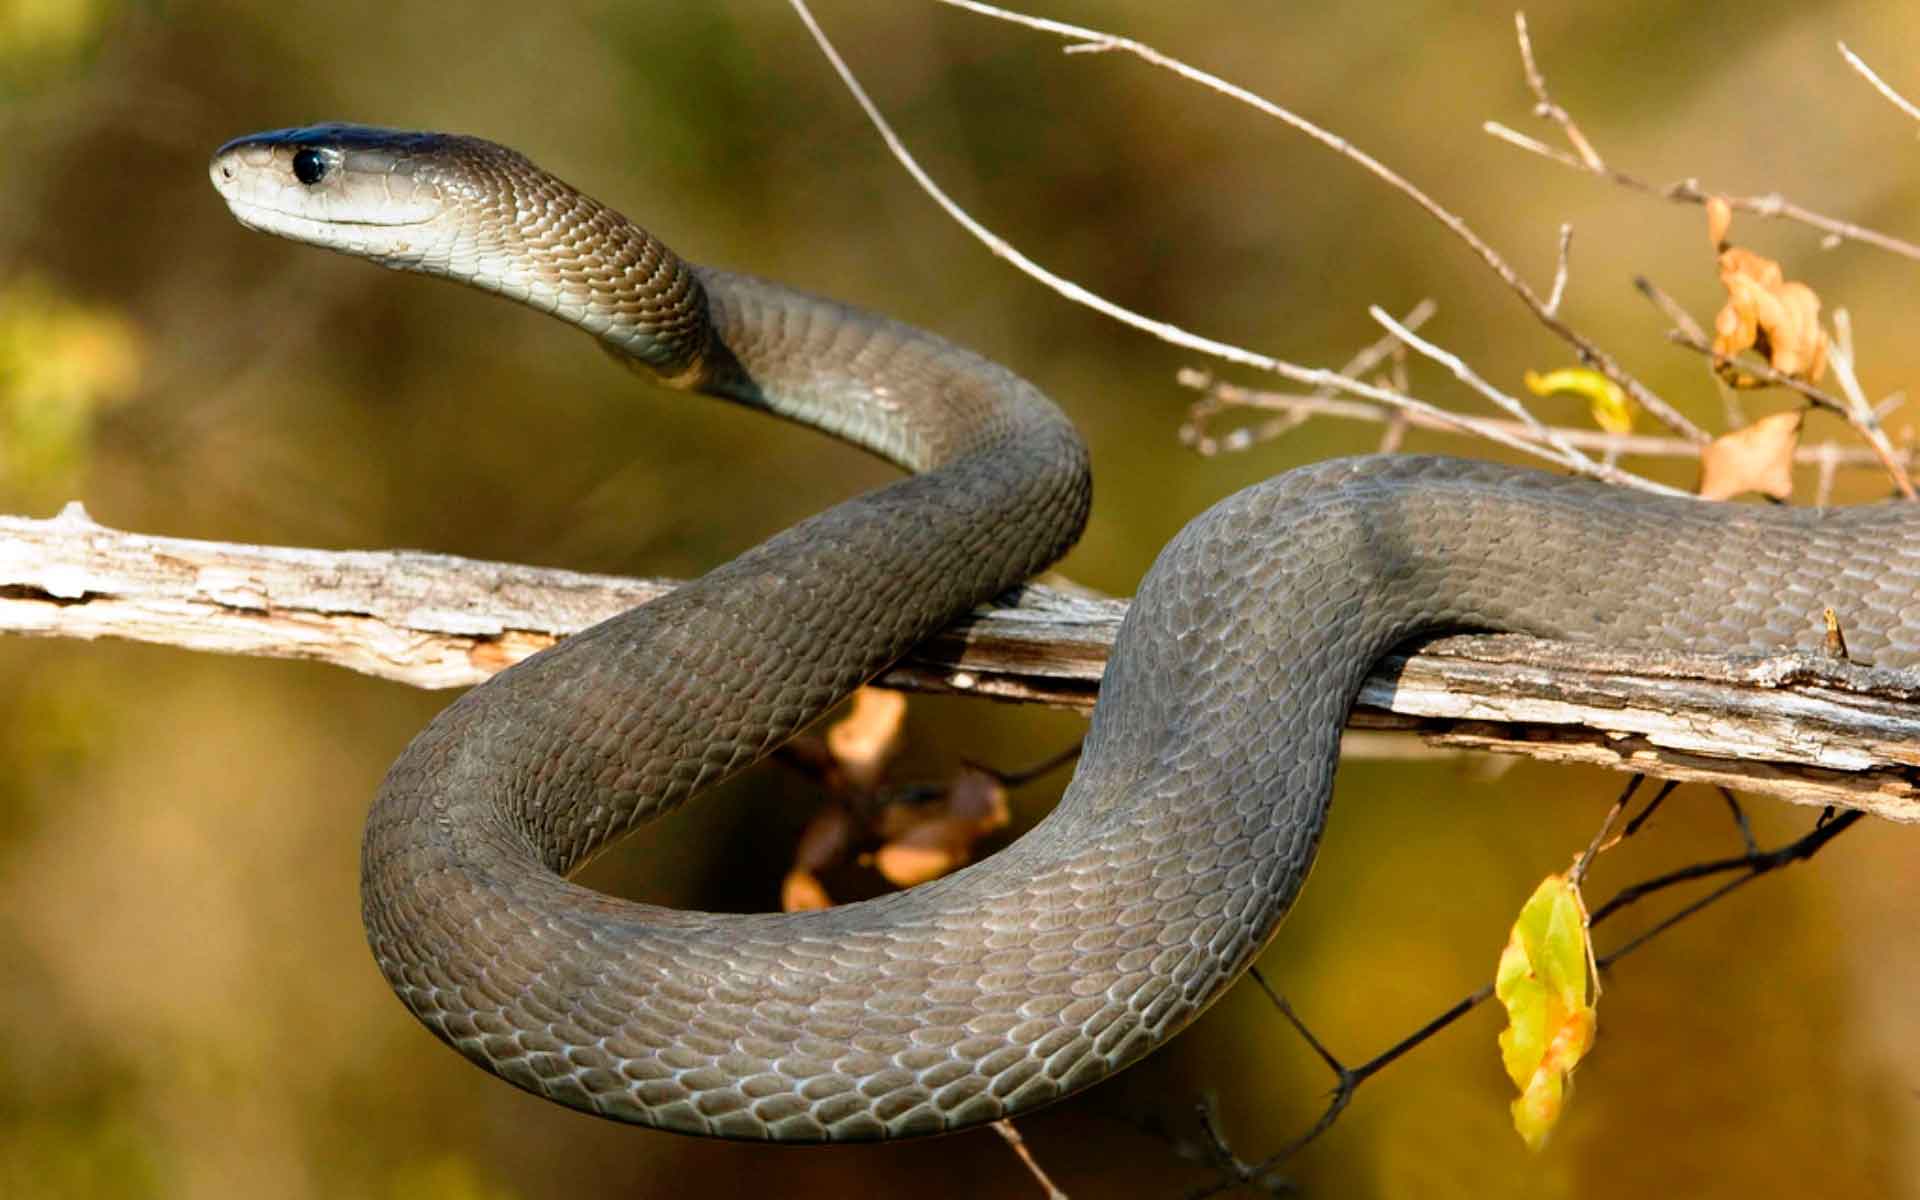 Змеи тверской области фото и описание